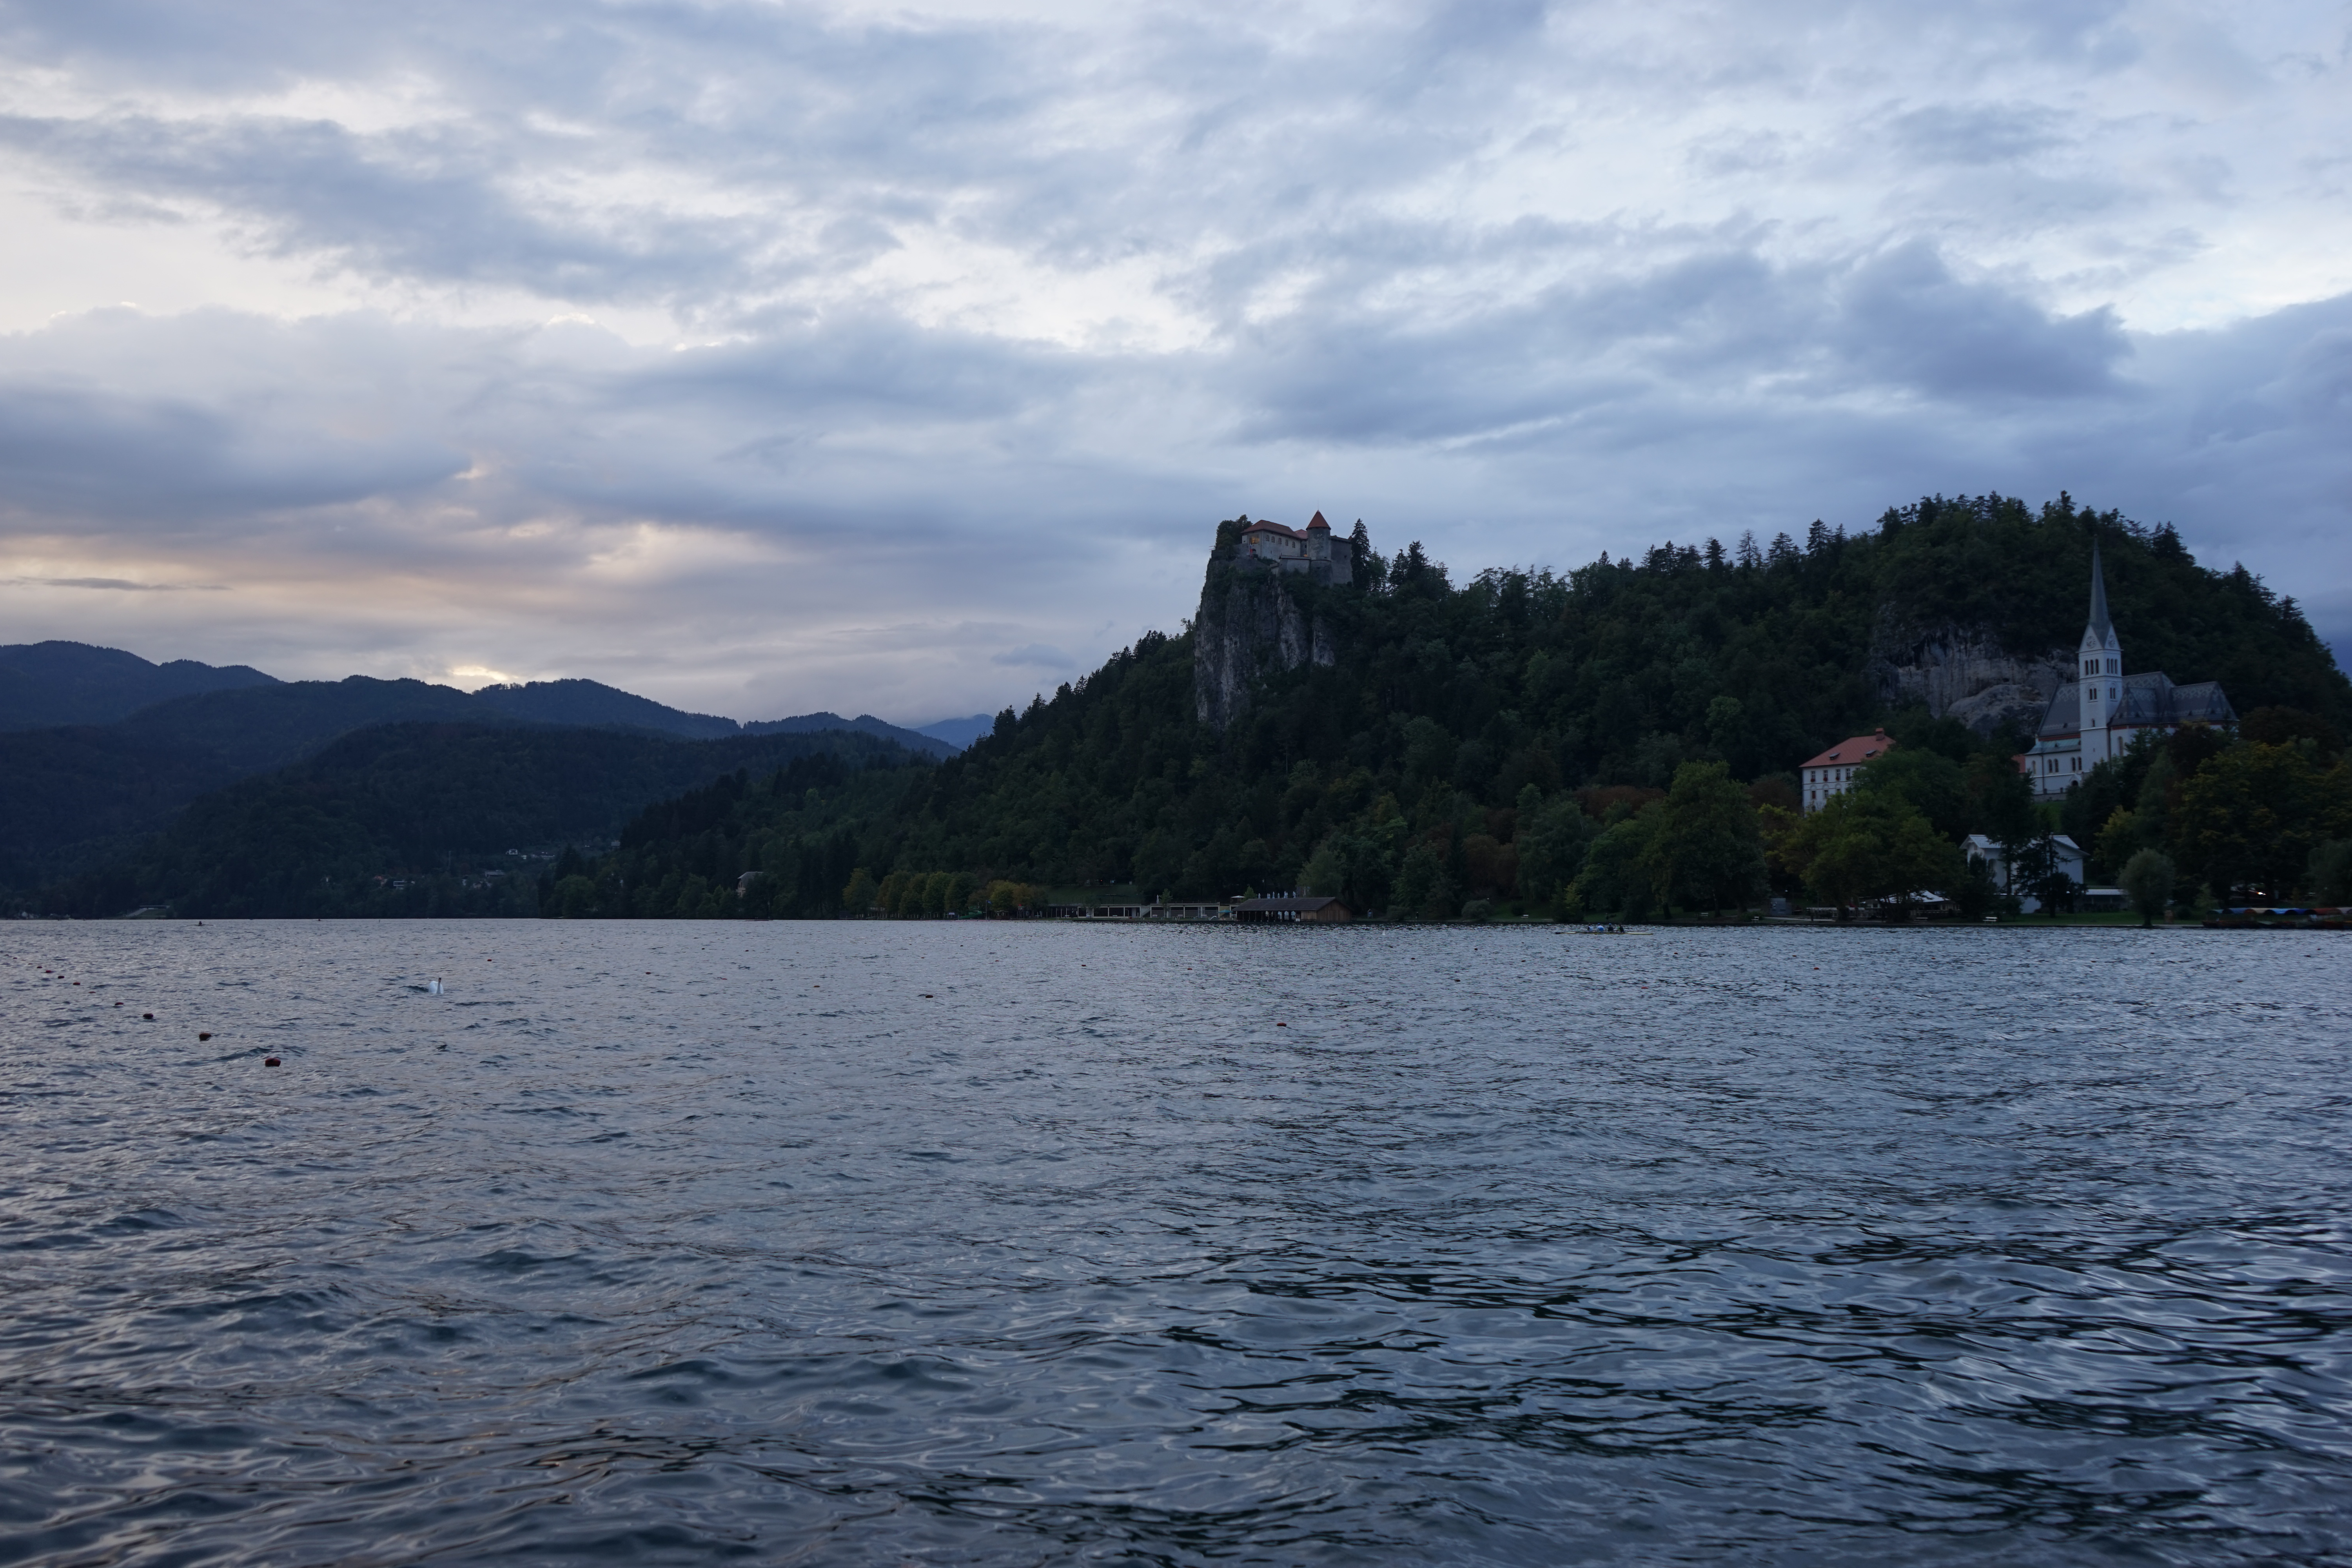 DSC03018 - 【スロベニア ブレッド湖・ボヒニュ湖・ヴィントガル渓谷】リュブリャナからブレッド湖への行き方とその魅力的な景色・雰囲気。